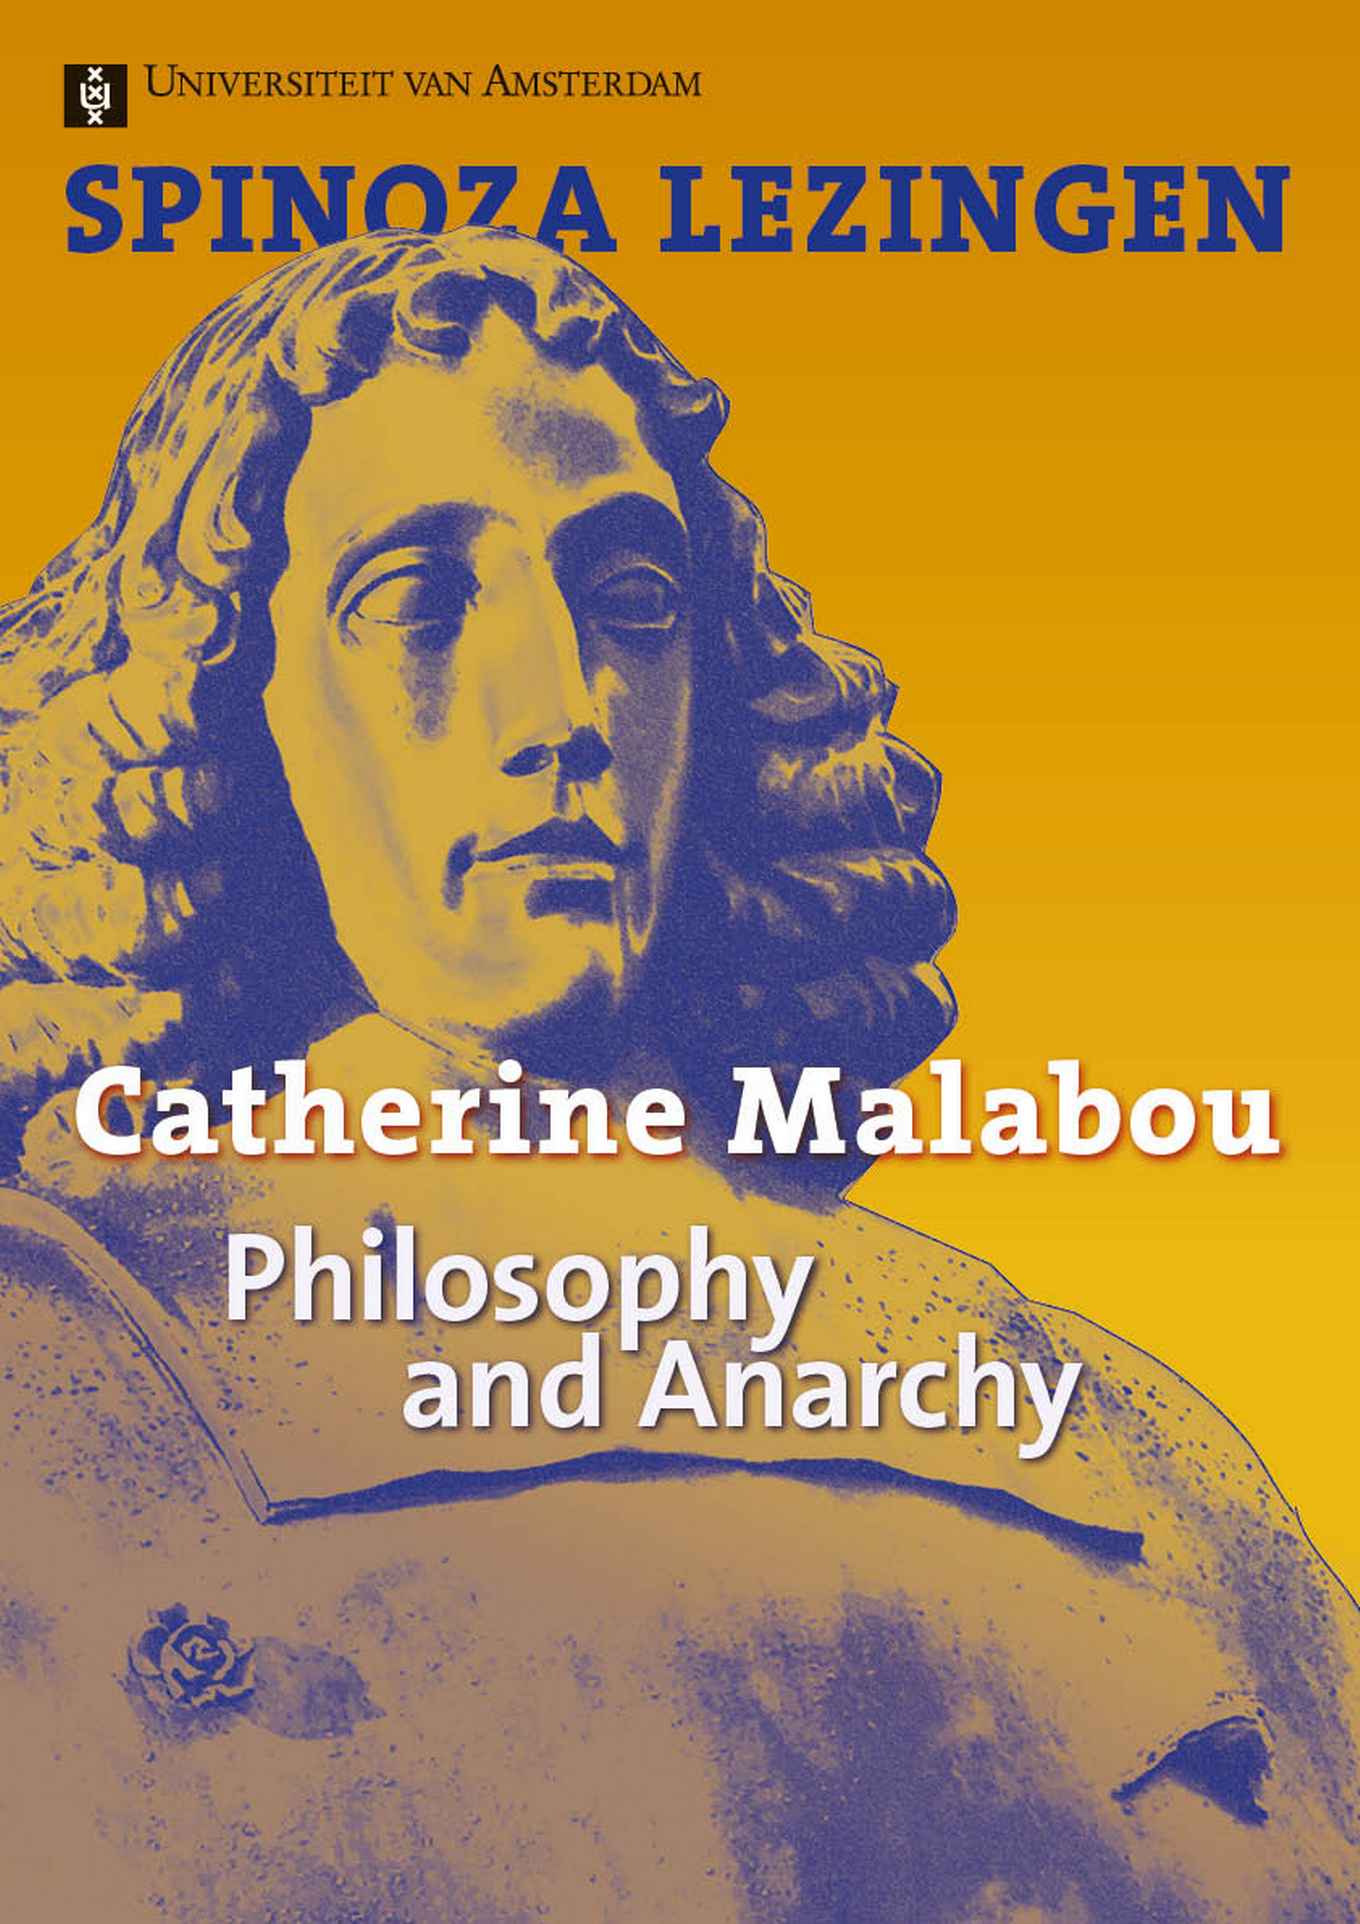 Spinozalezing Catherine Malabou